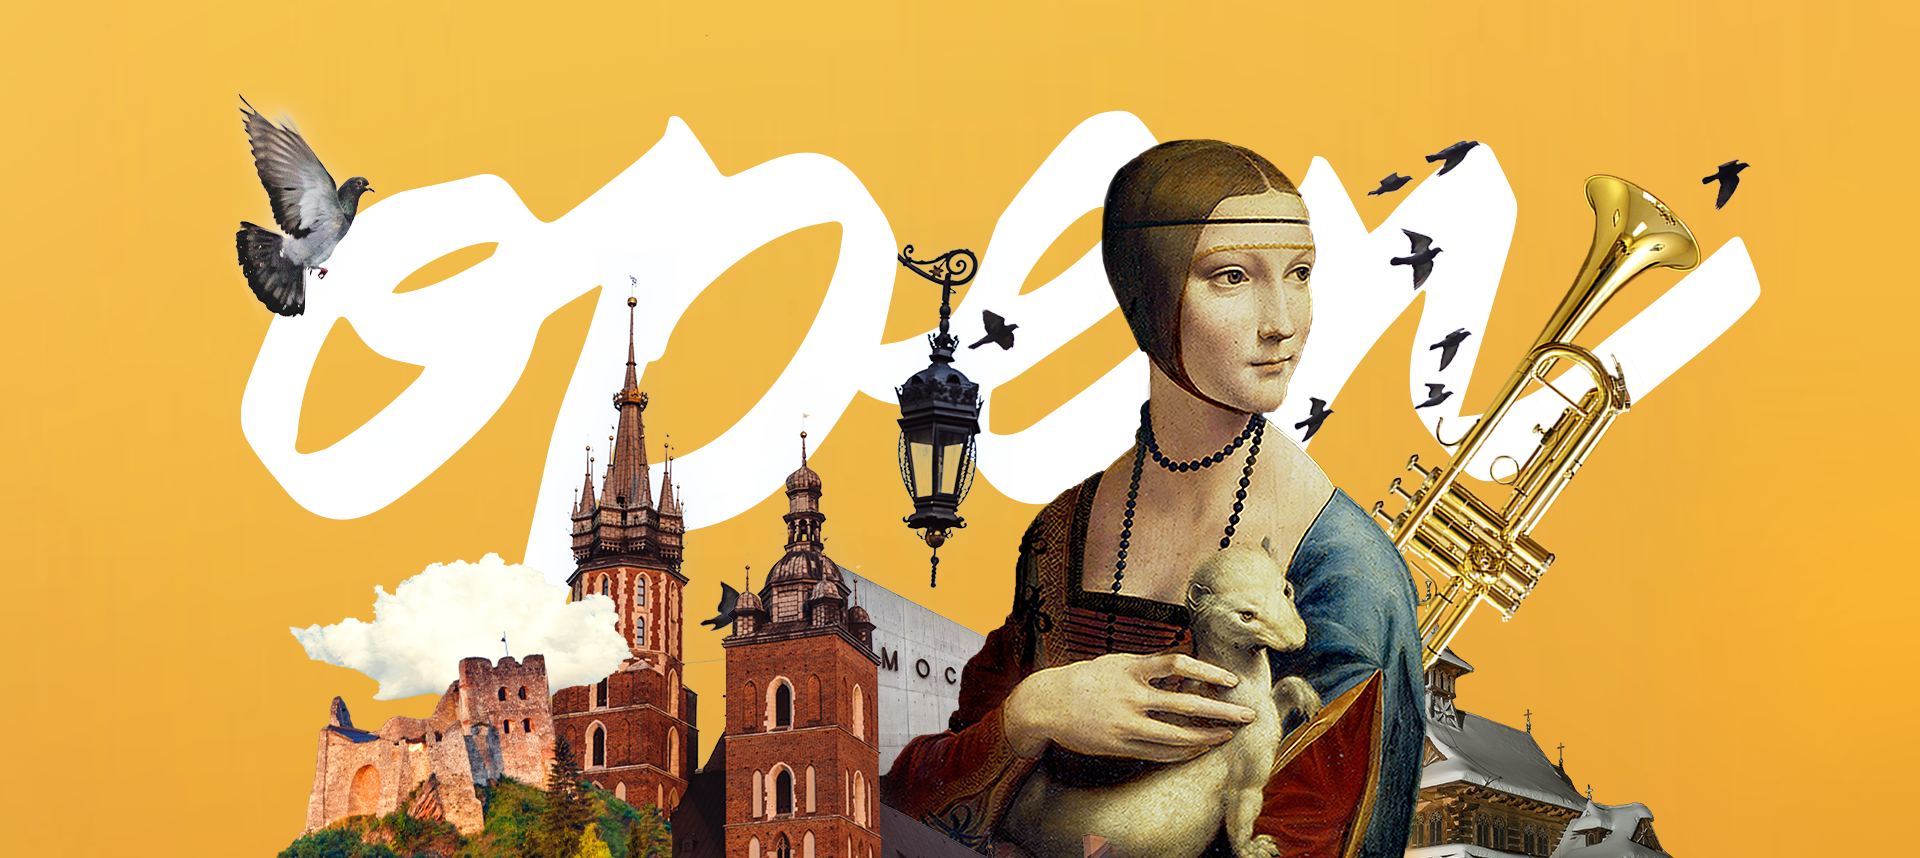 Małopolska Tourism Organisation –360 campaign